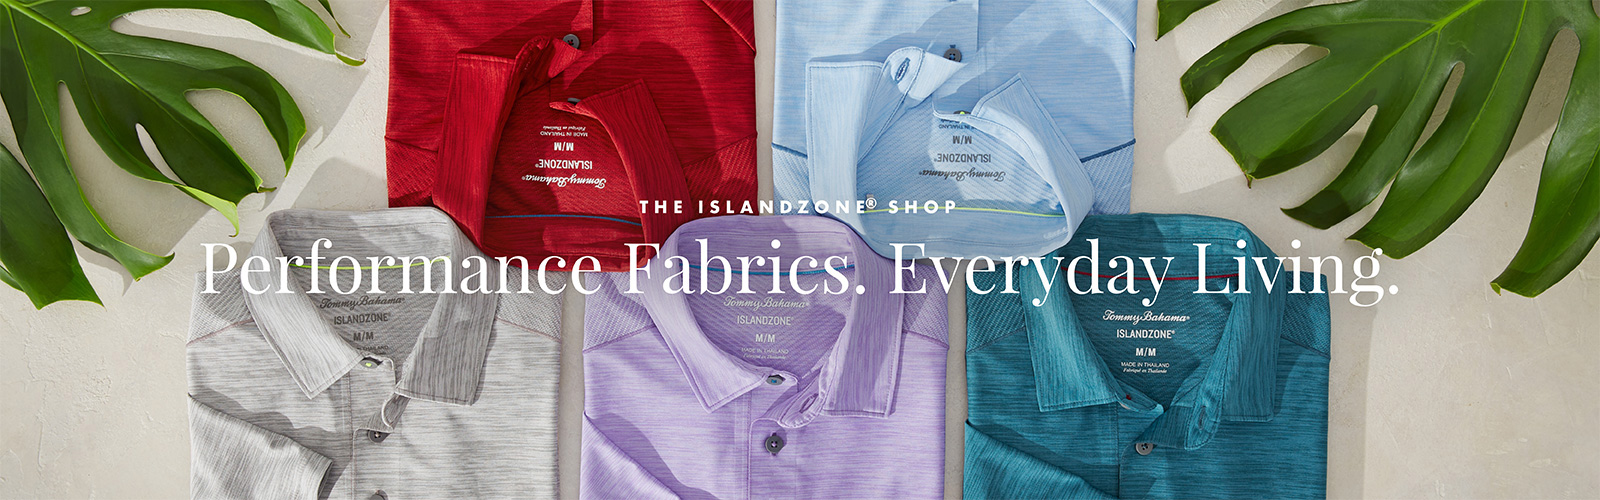 The IslandZone® Shop - Performance Fabrics. Everyday Living.